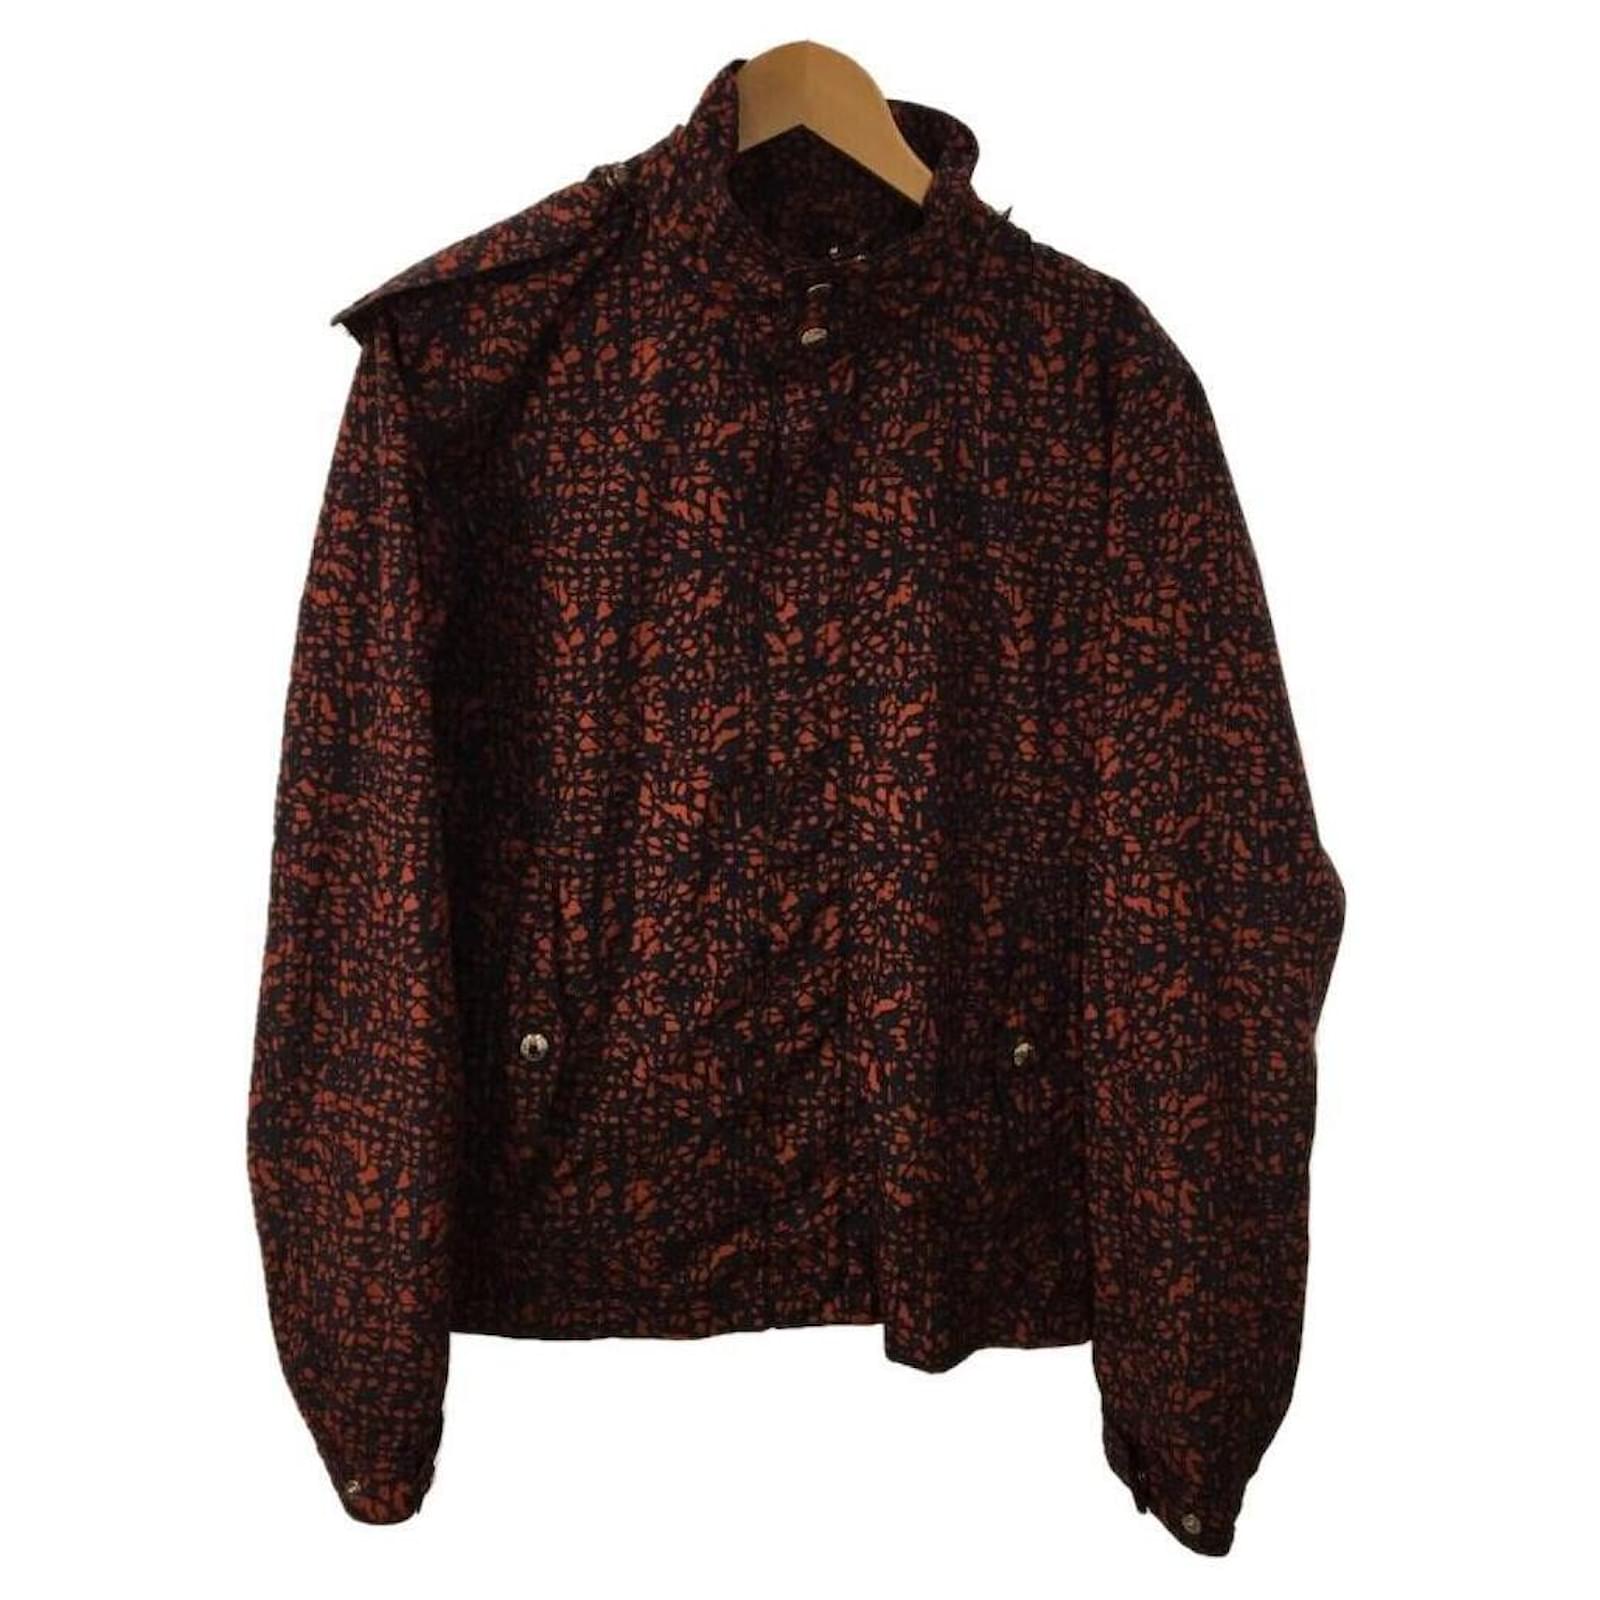 Louis Vuitton coat in leopard print cotton blend with brown